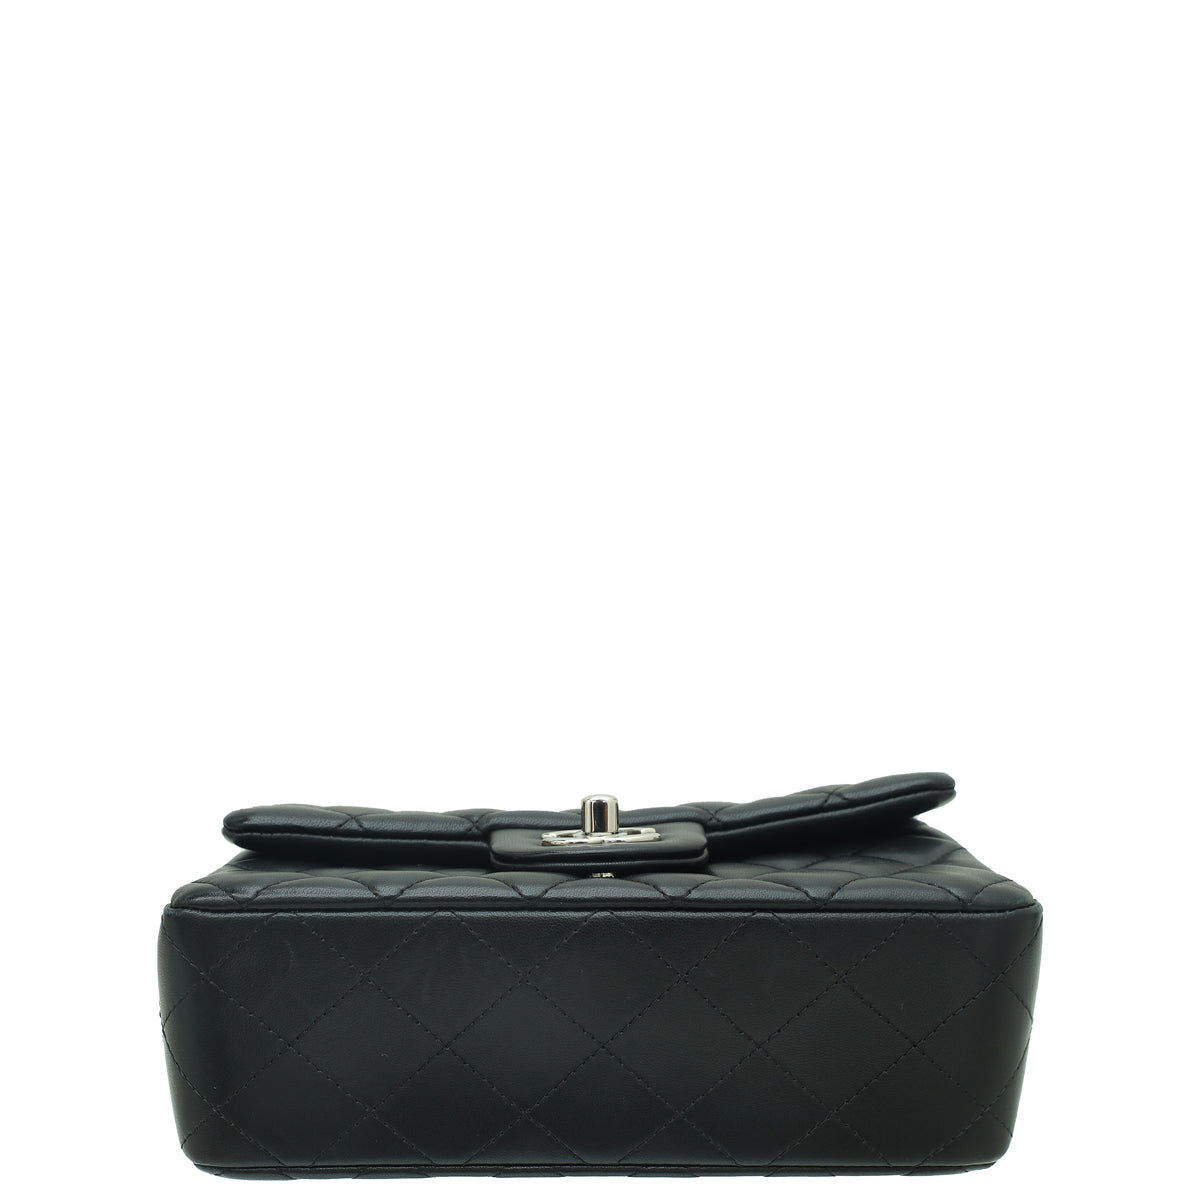 Chanel Black CC Mini Rectangular Flap Bag